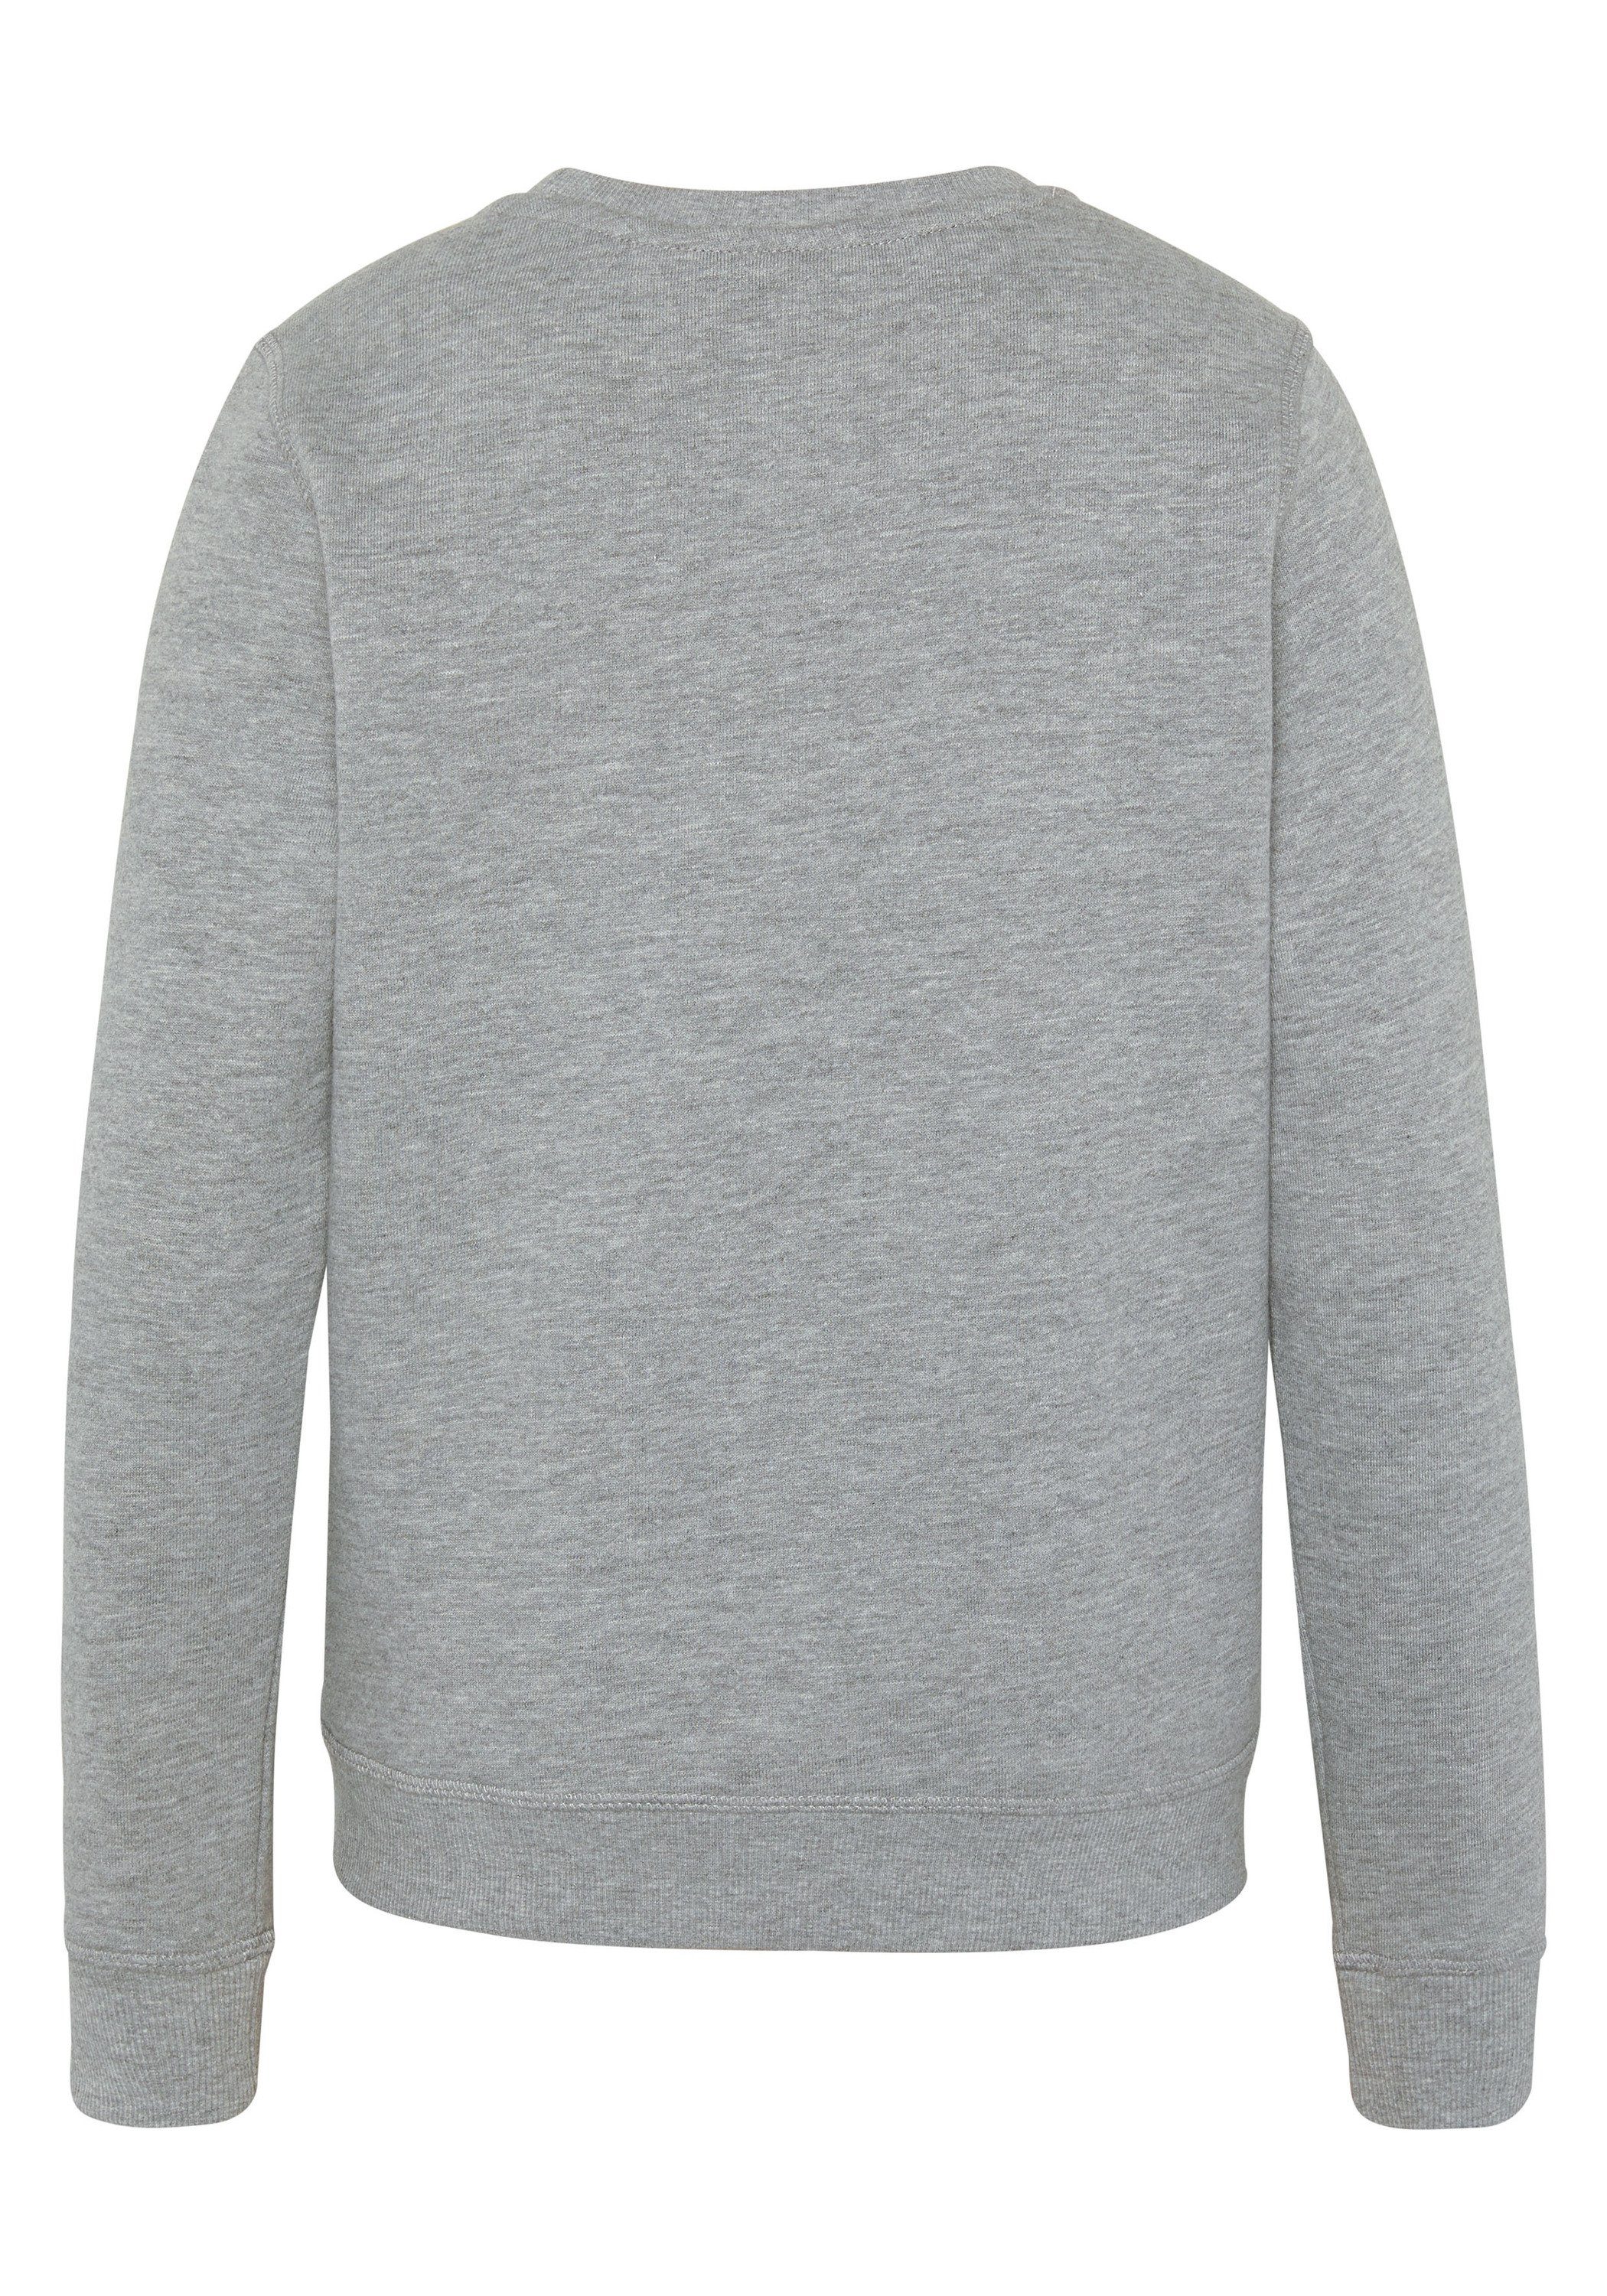 Polo mit Label-Print Sylt Neutr. Gray Sweatshirt